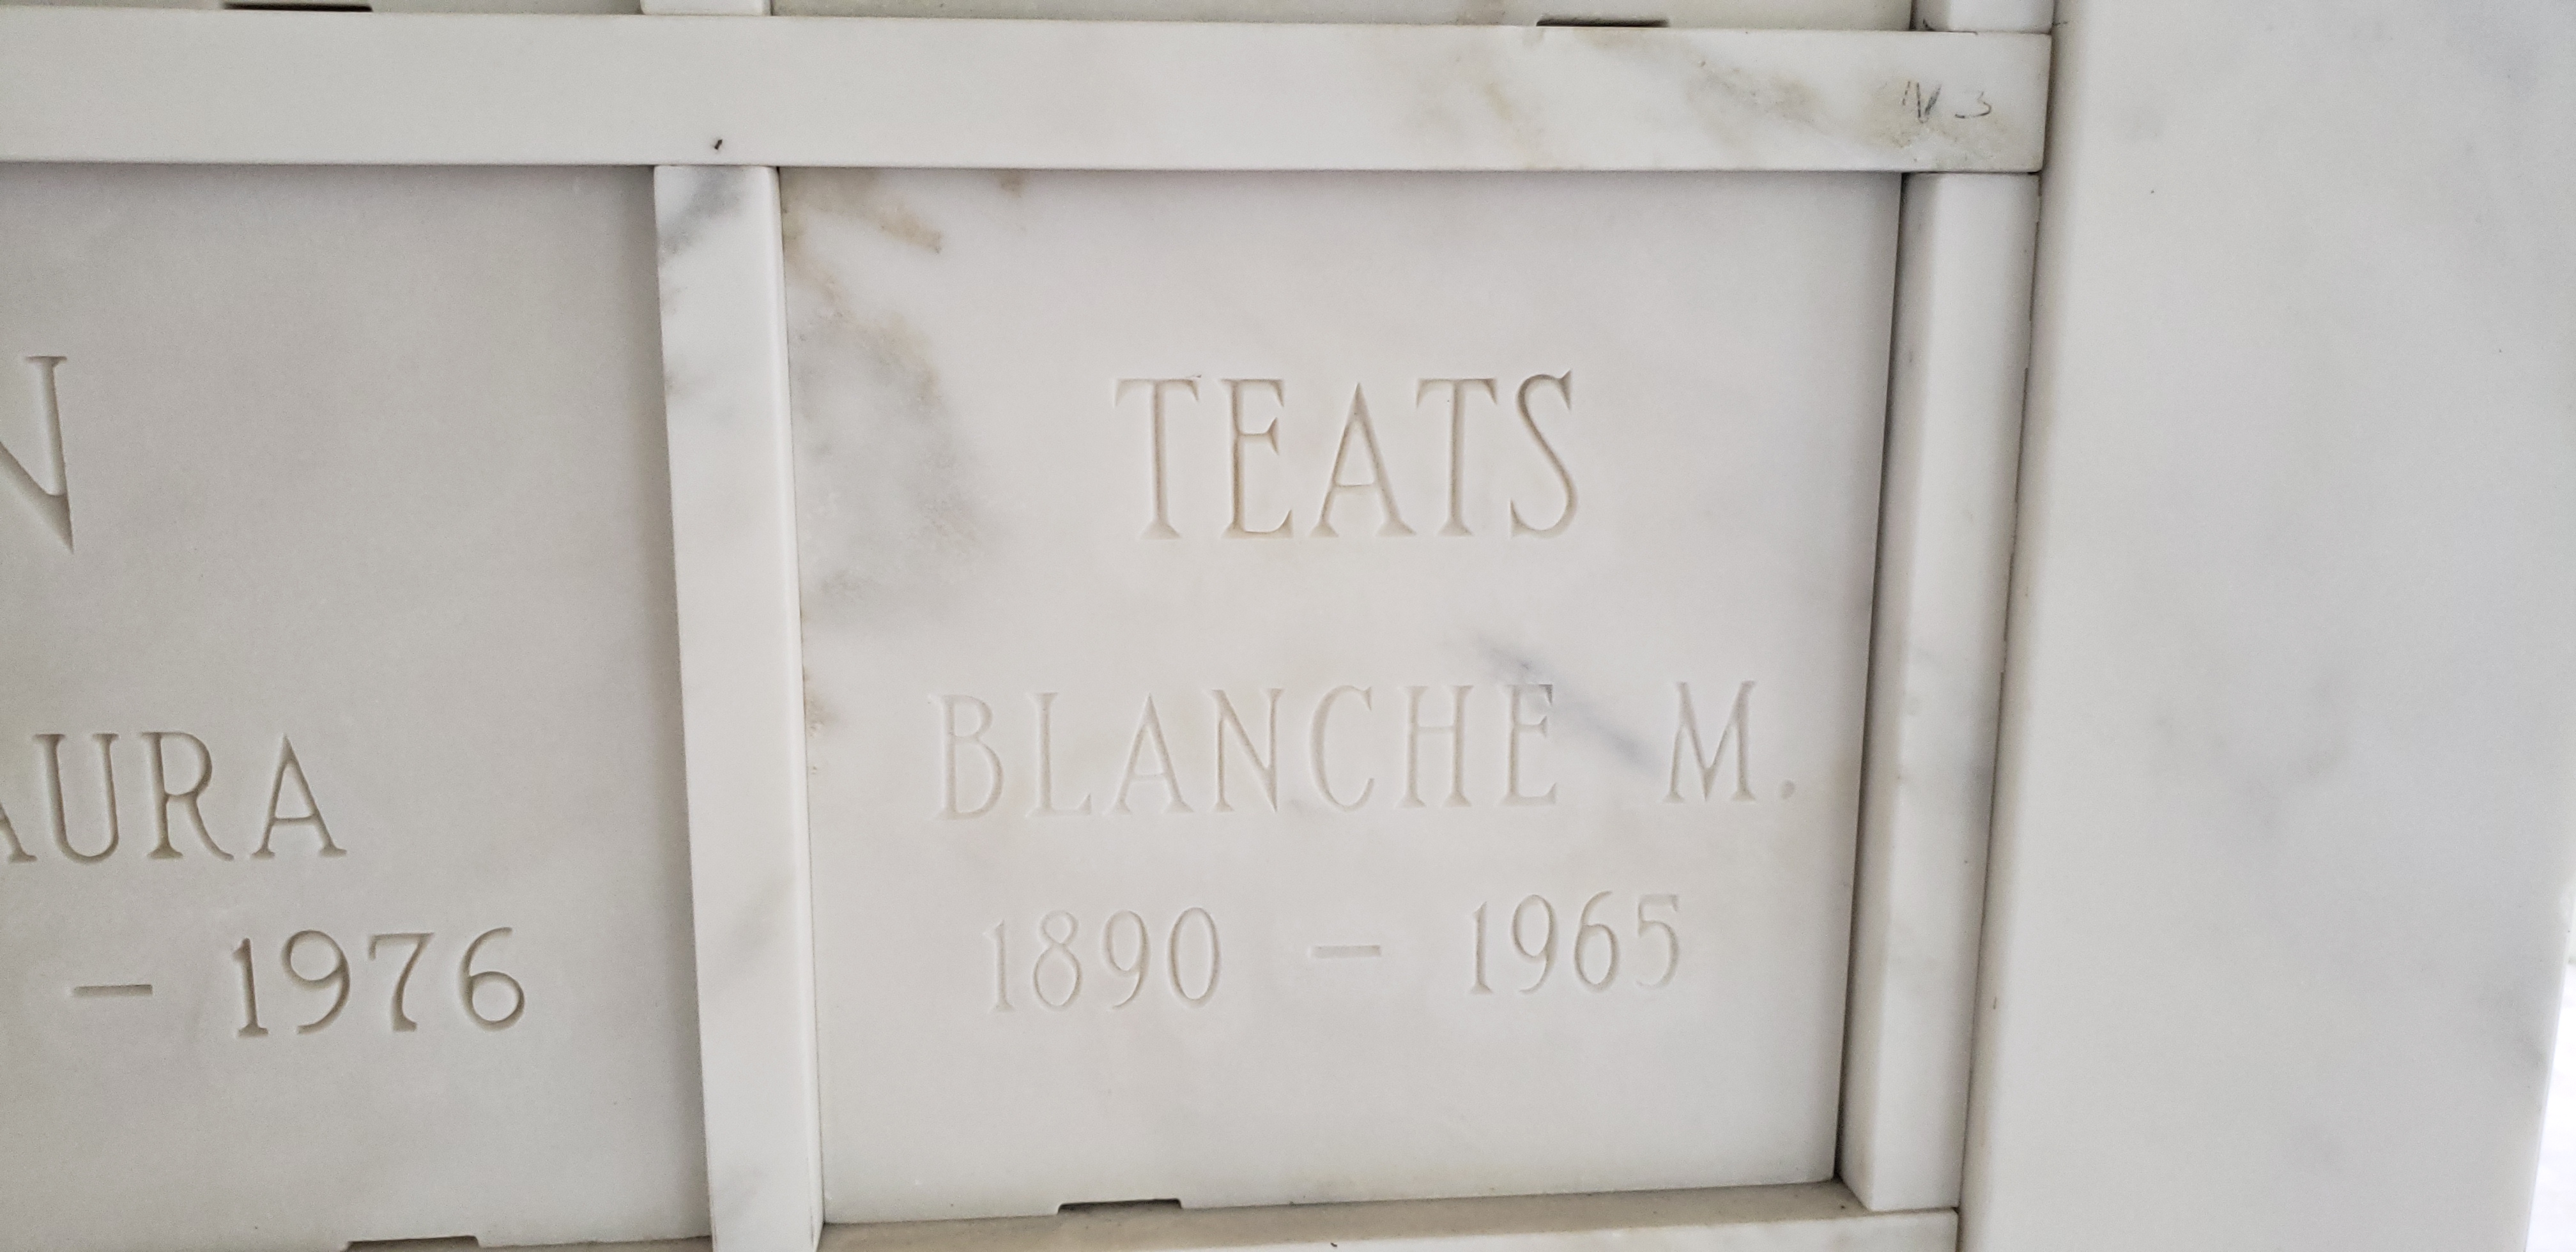 Blanche M Teats